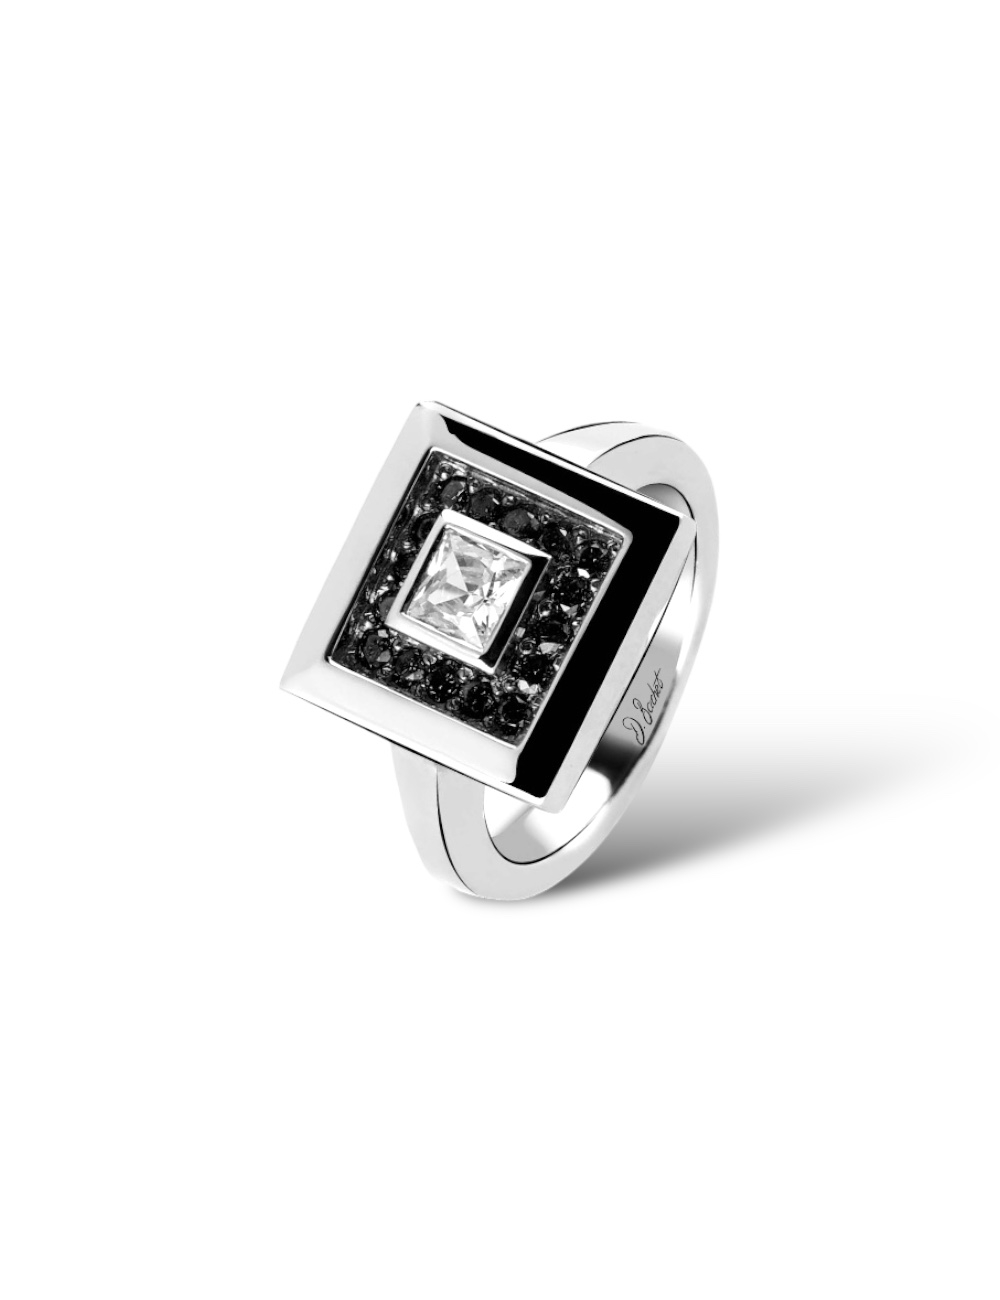 Select Ring: 0.20 ct princess-cut diamond, black diamond halo, modern and bold, made in France.